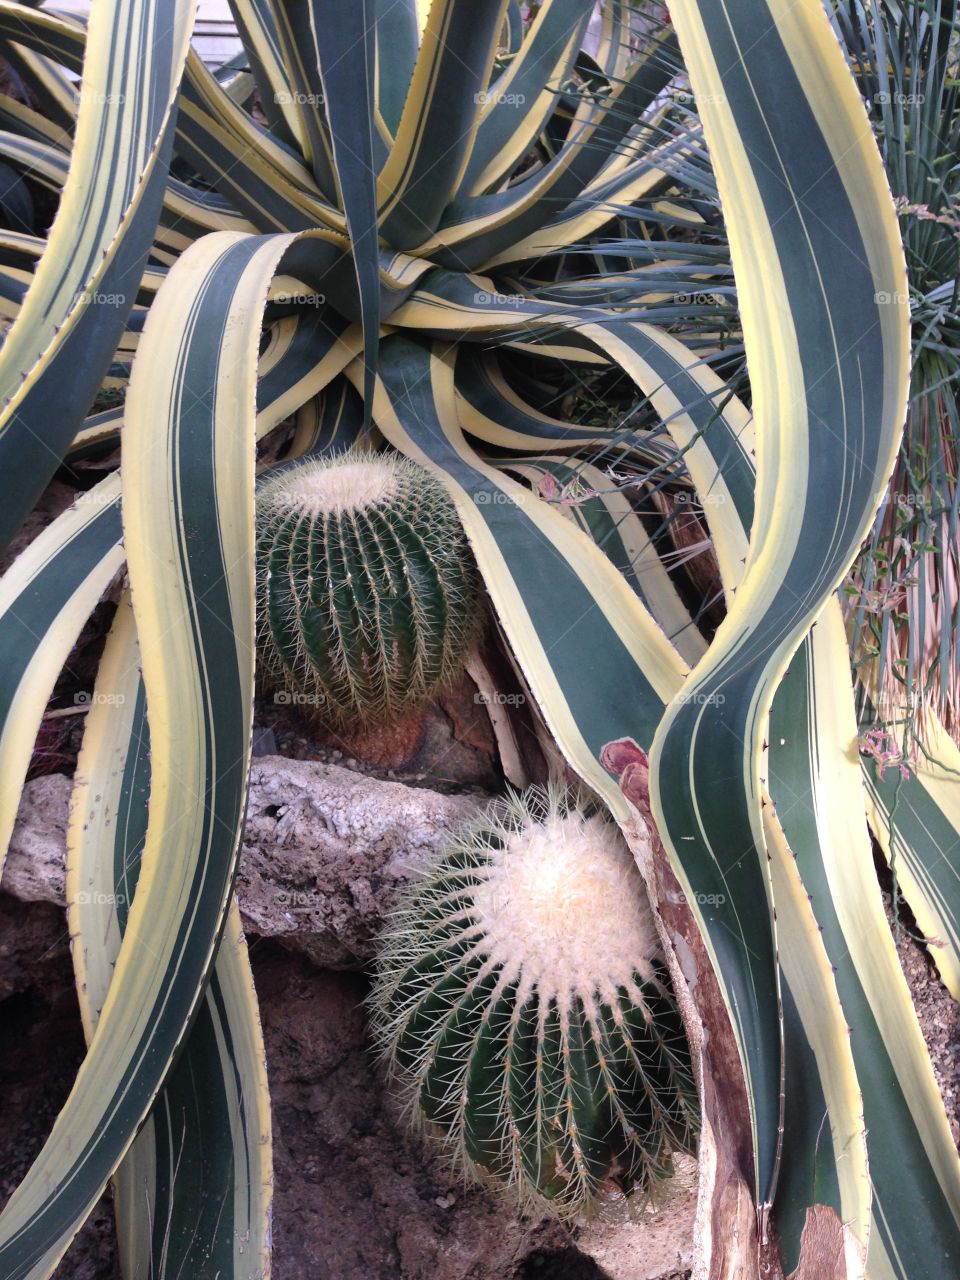 Crazy plants in PA botanical garden 